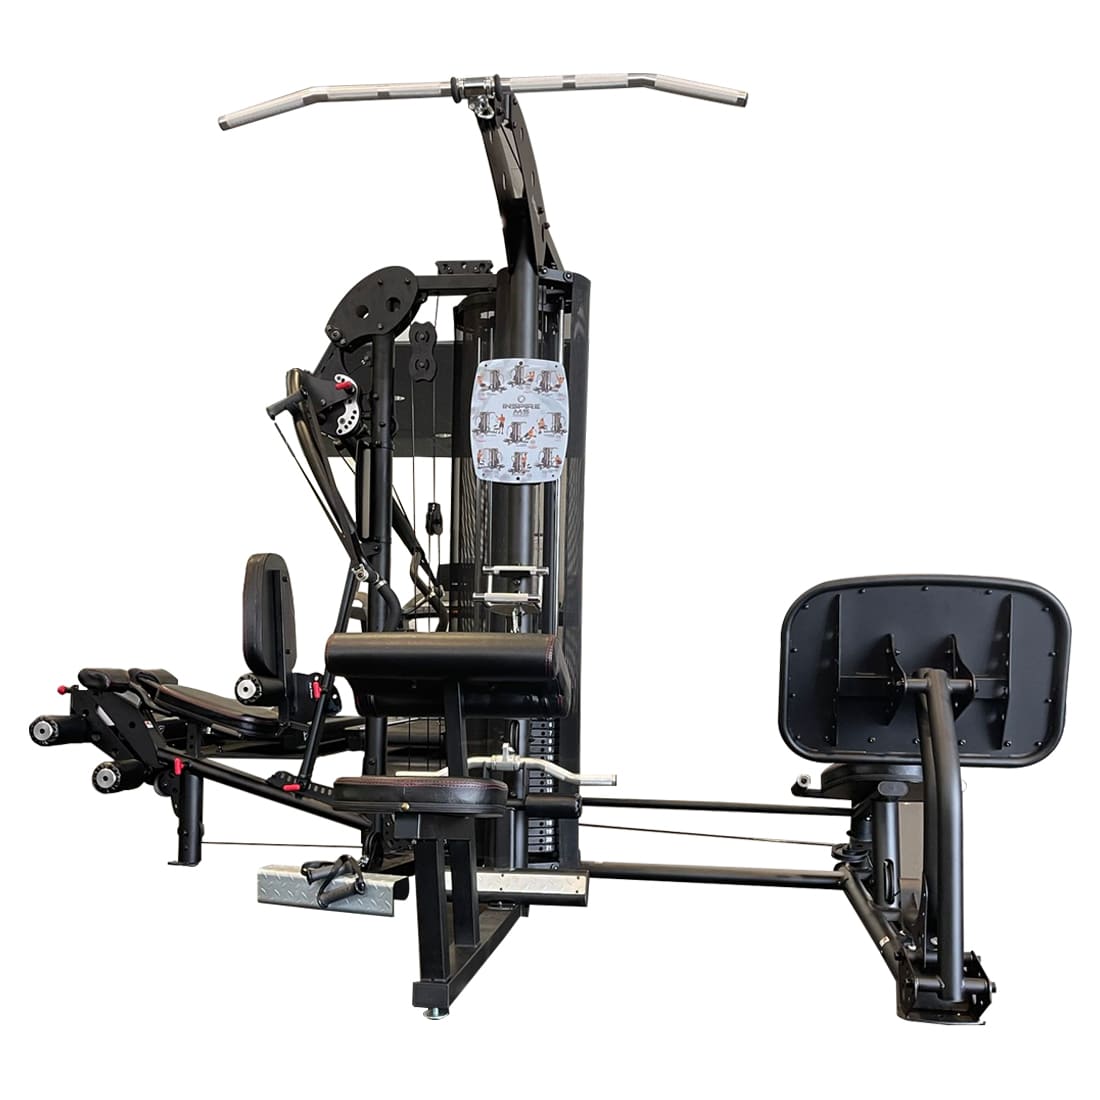 Inspire Multi Gym M5 With Leg Press Attachment - Display Unit